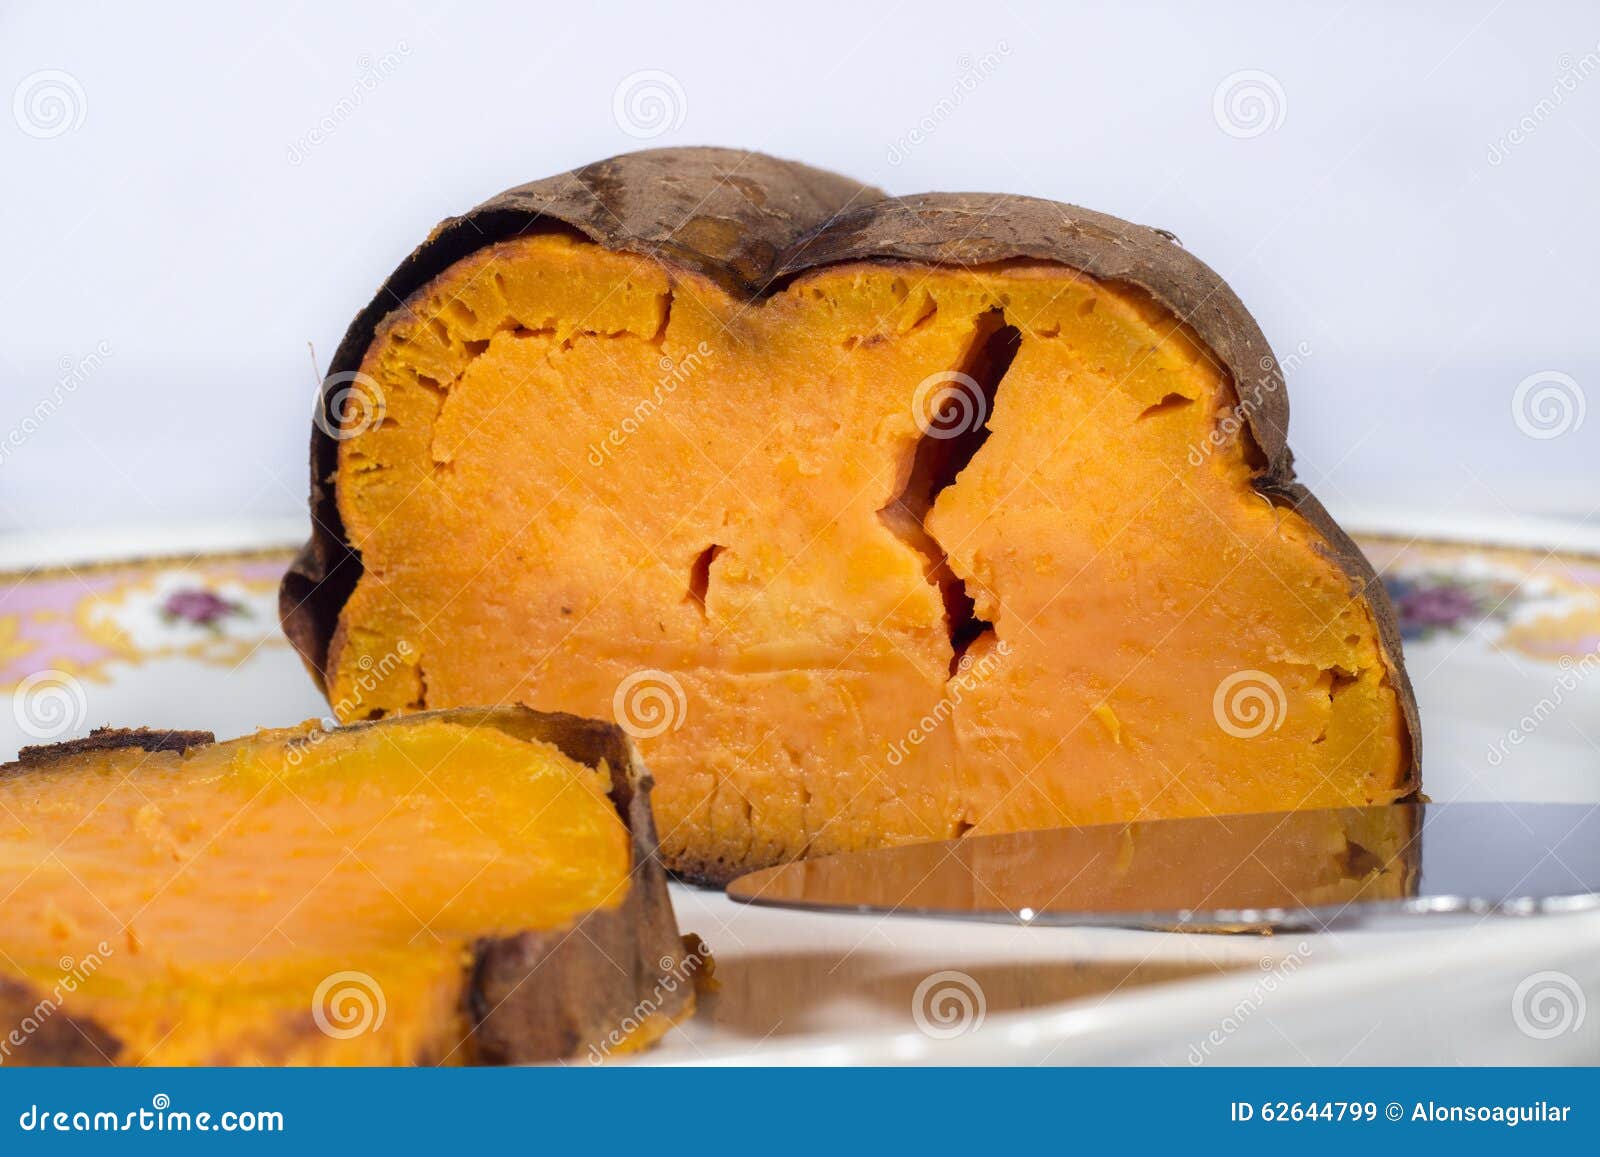 Roasted Sweet Potato In Ceramic Tray Stock Image Image Of Dish Root 62644799,Potato Bread Nutrition